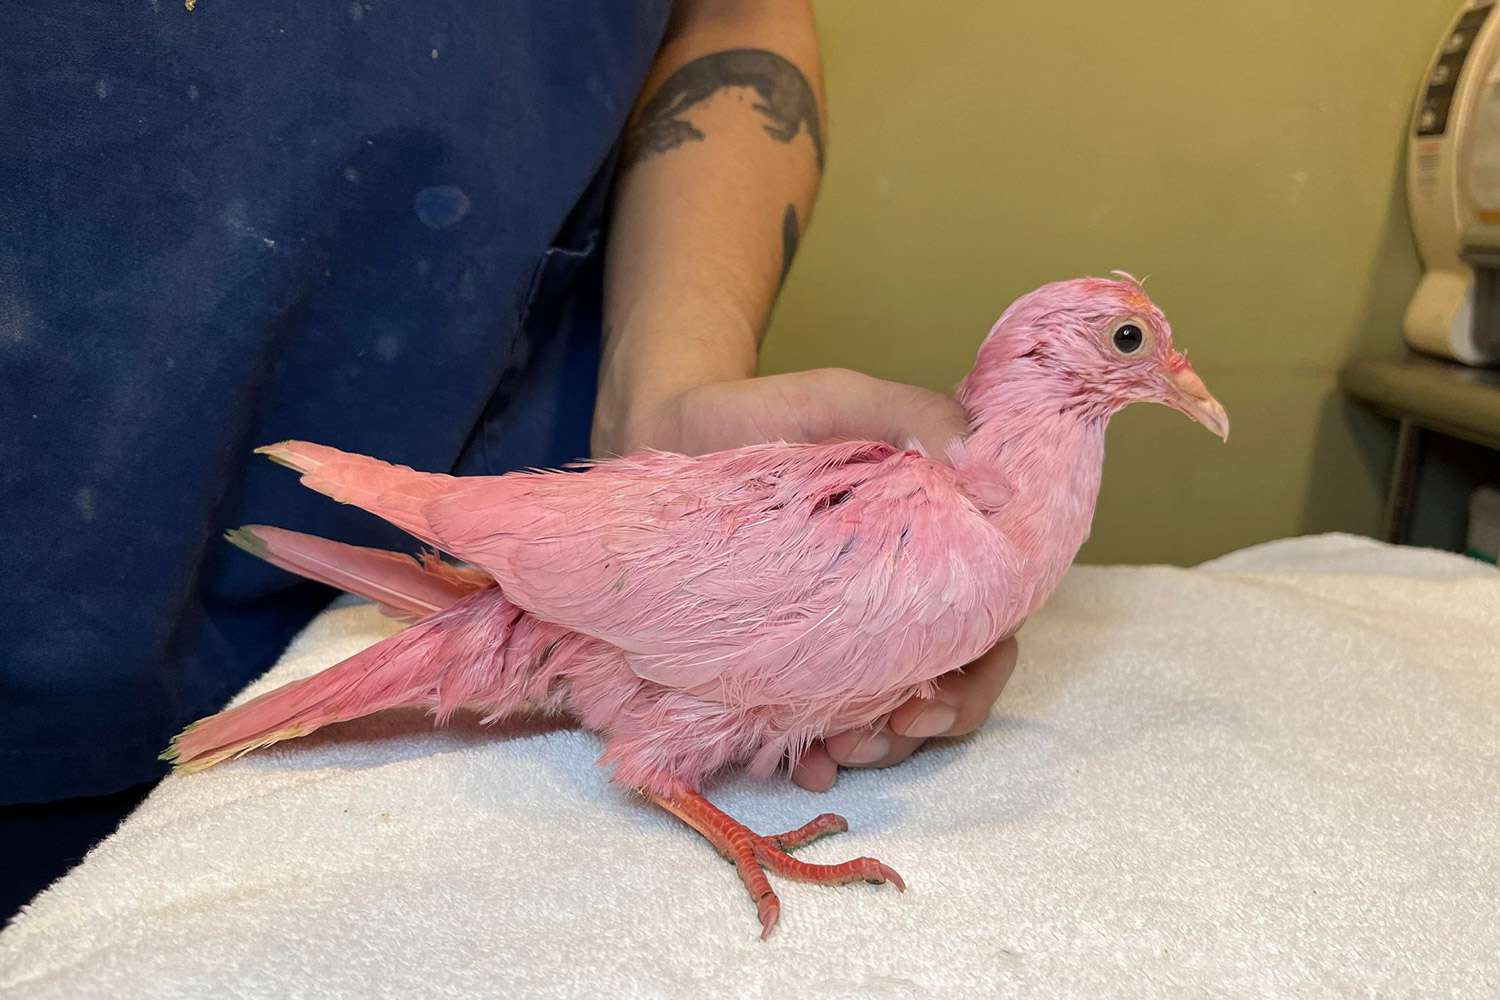 Penyelamatan Hewan Memperingatkan 'Jangan Pernah Mewarnai Burung' Setelah Merpati Merah Muda 'Berjuang' Ditemukan Mengembara NYC